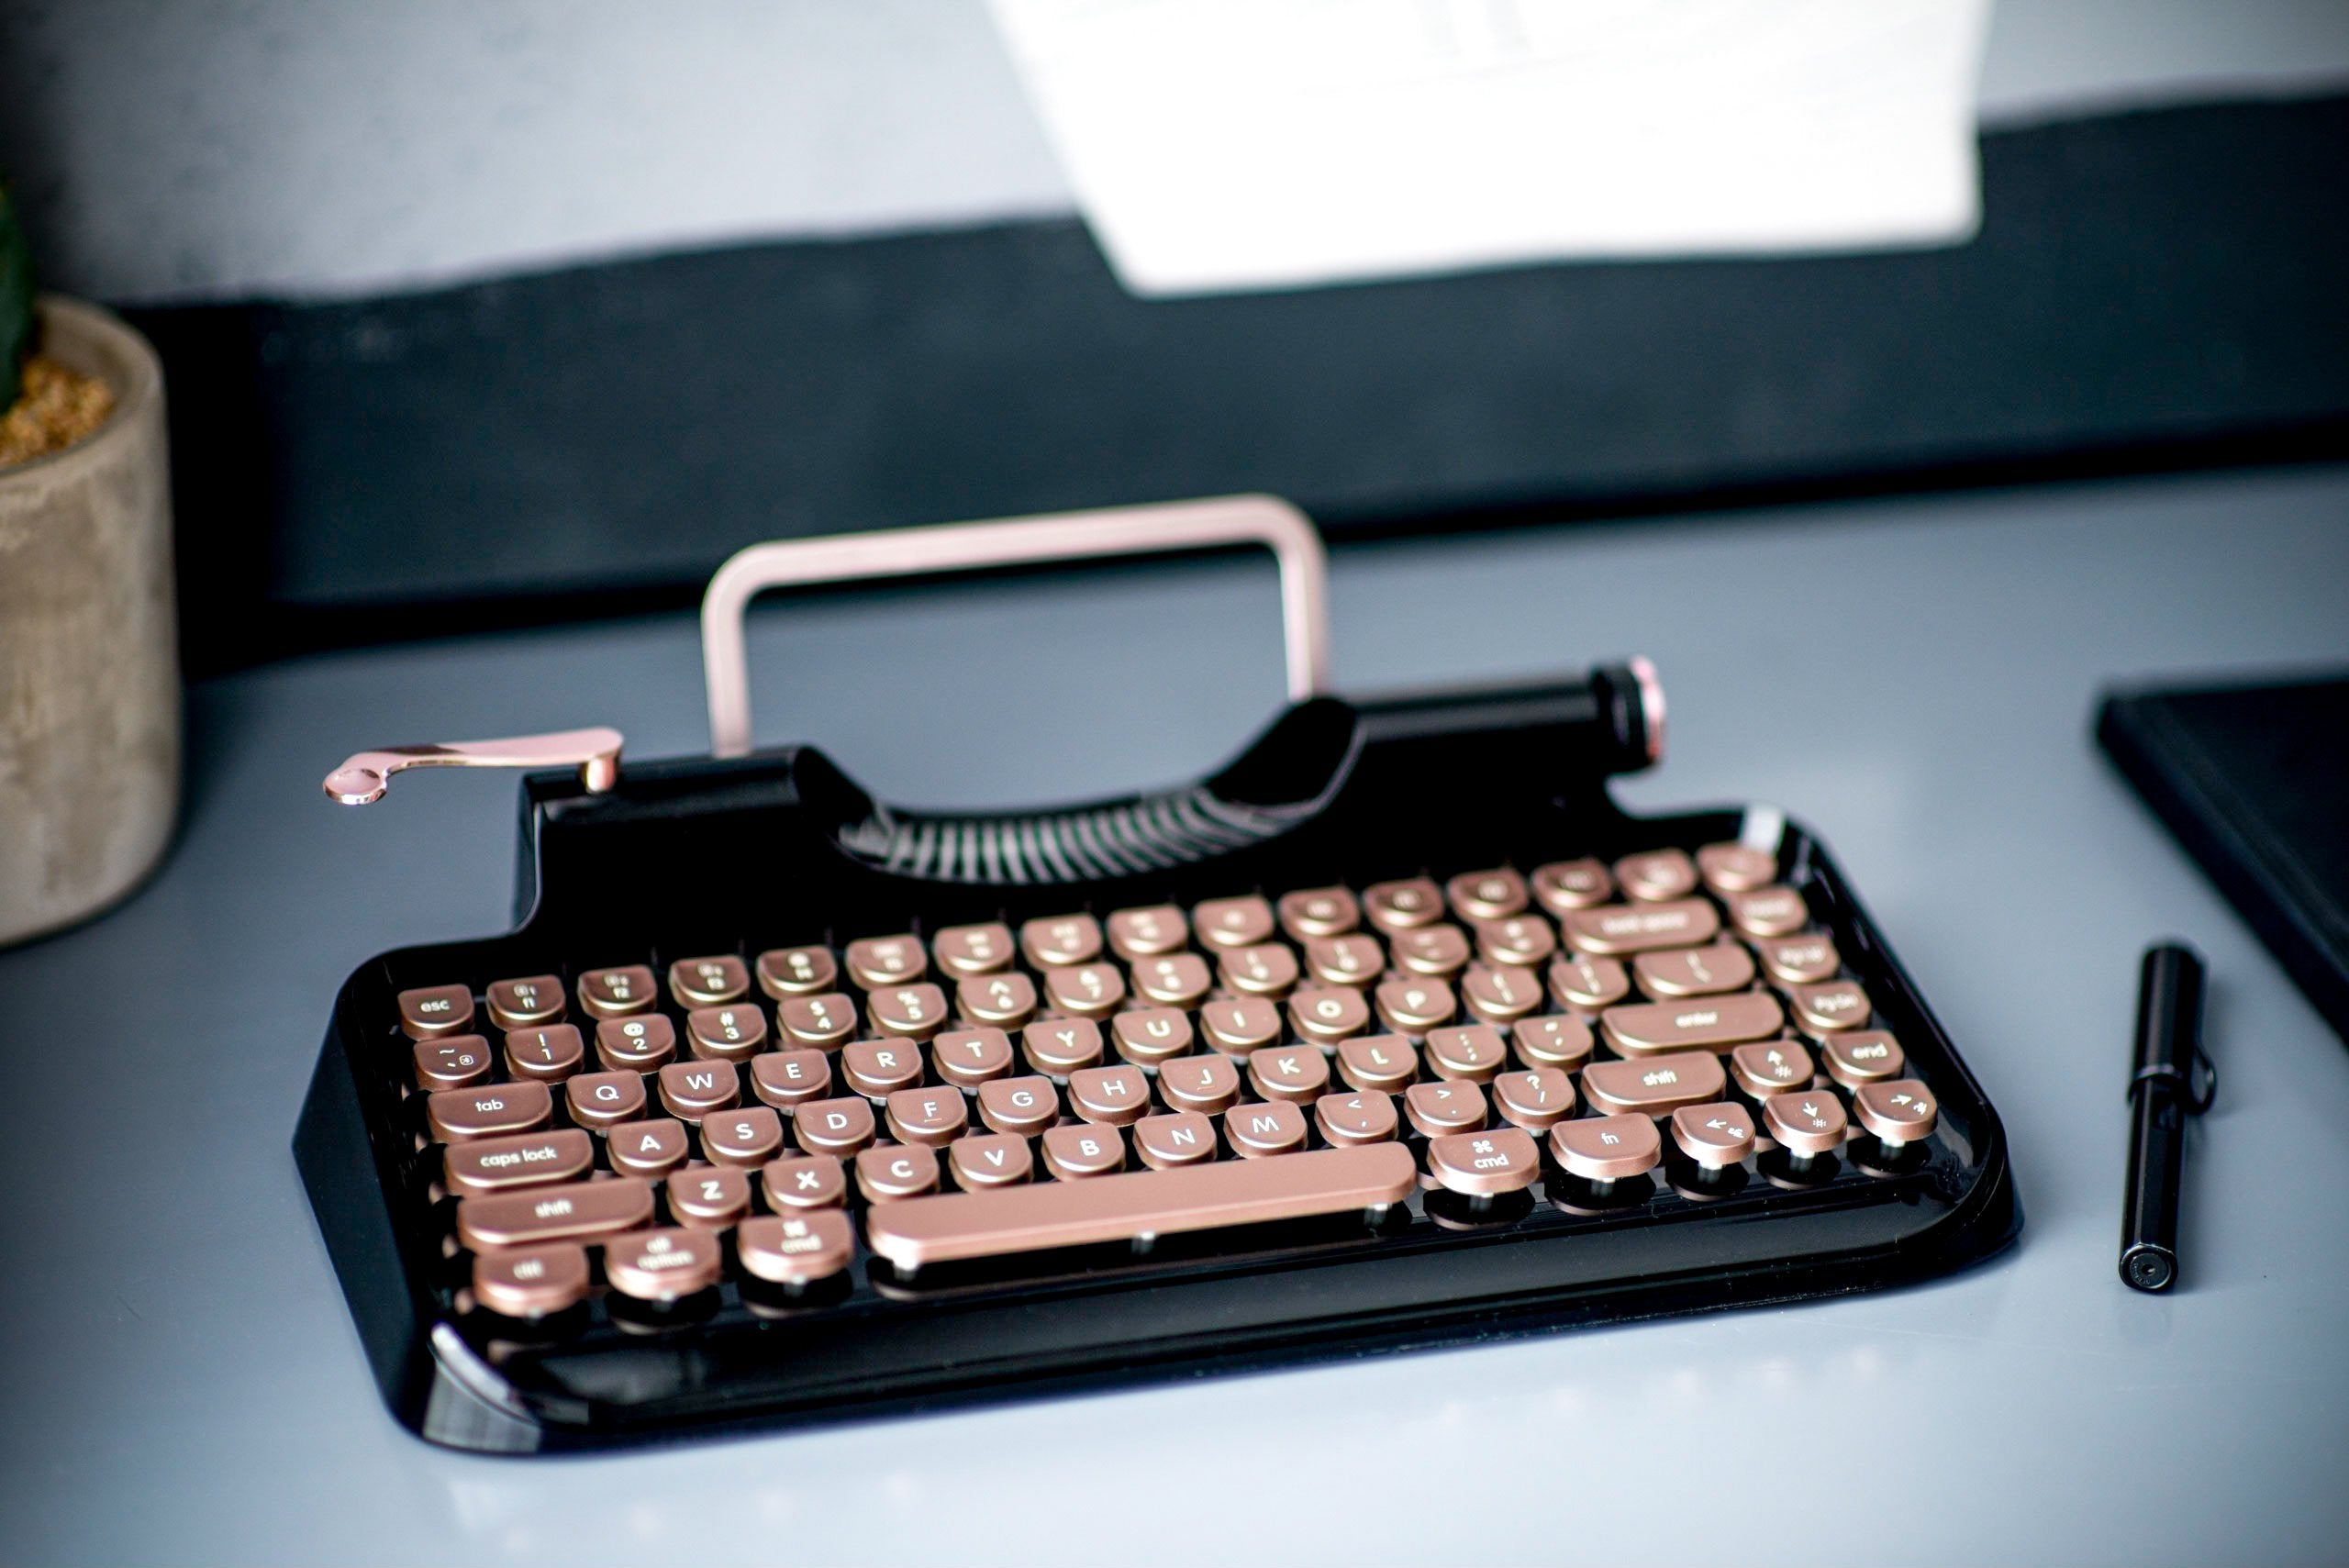 Smartinny mechanical keyboard KS-r